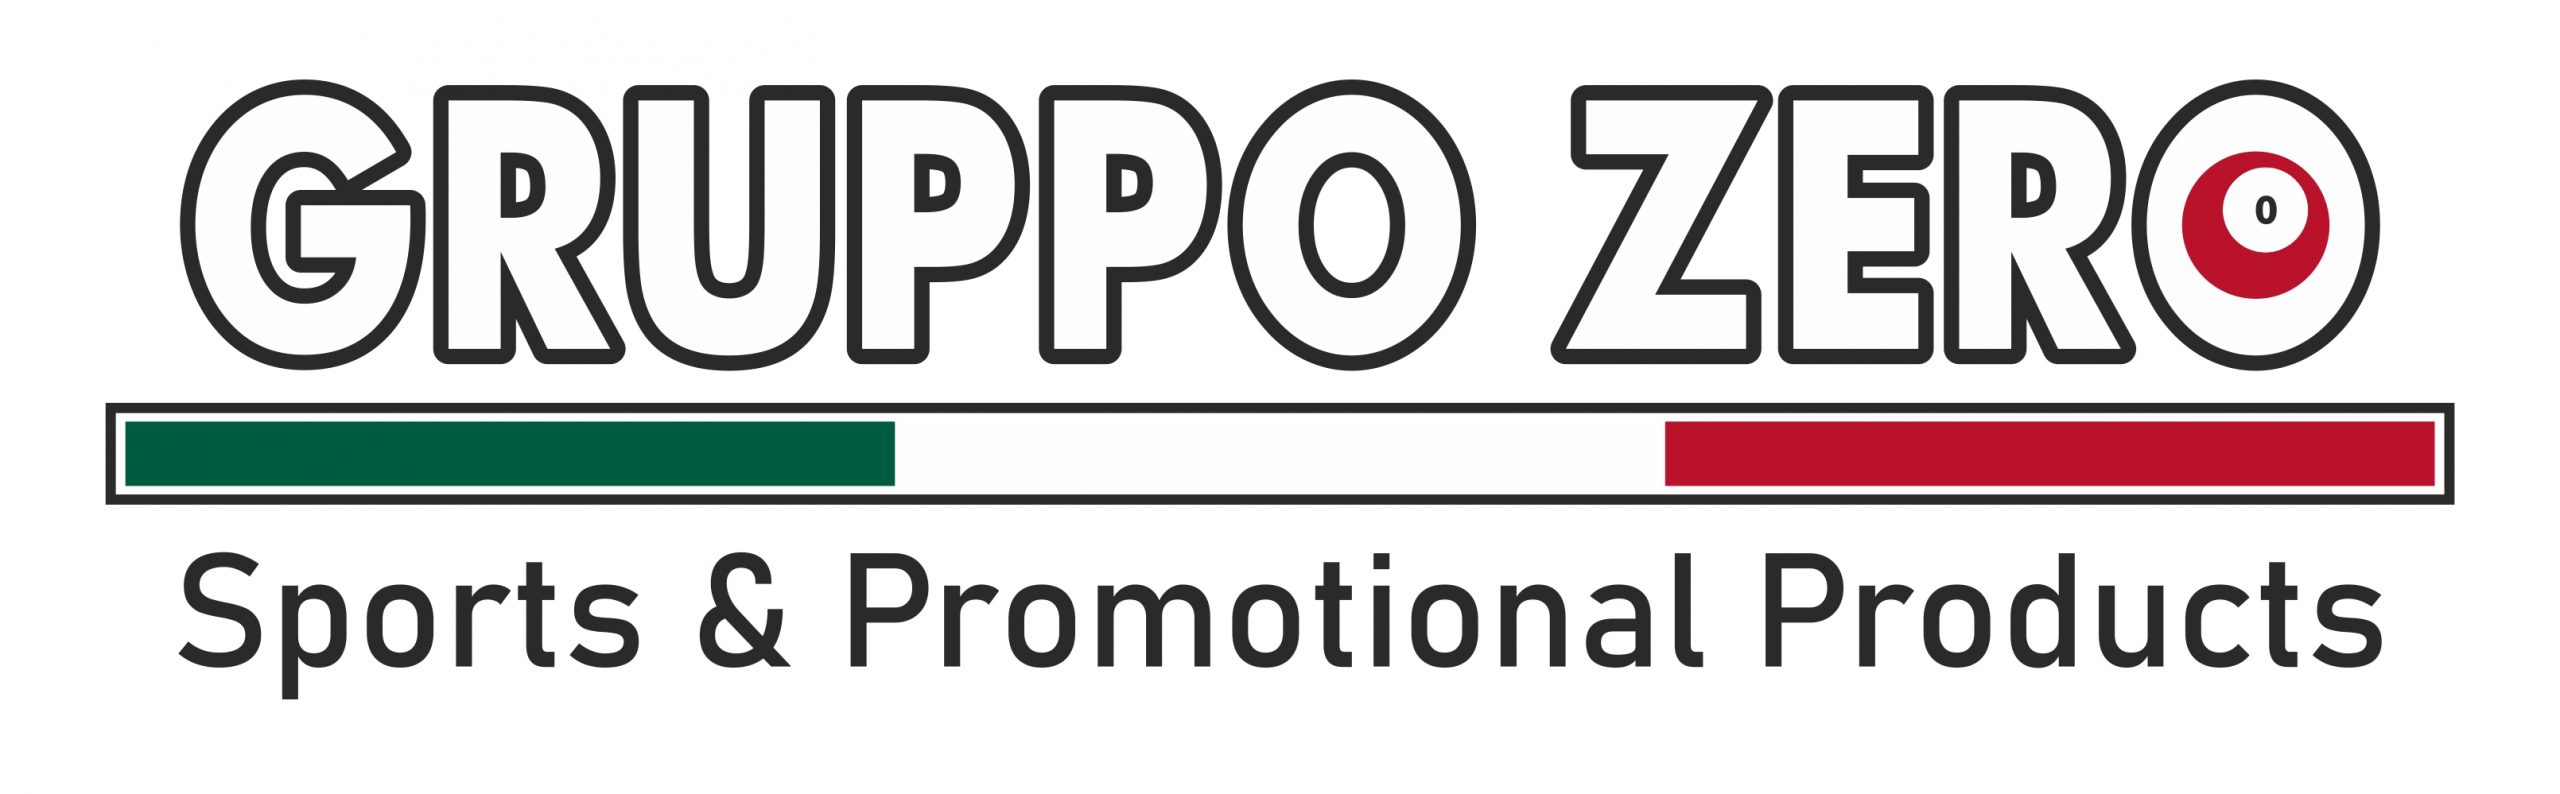 gruppozero logo 2022 immagine